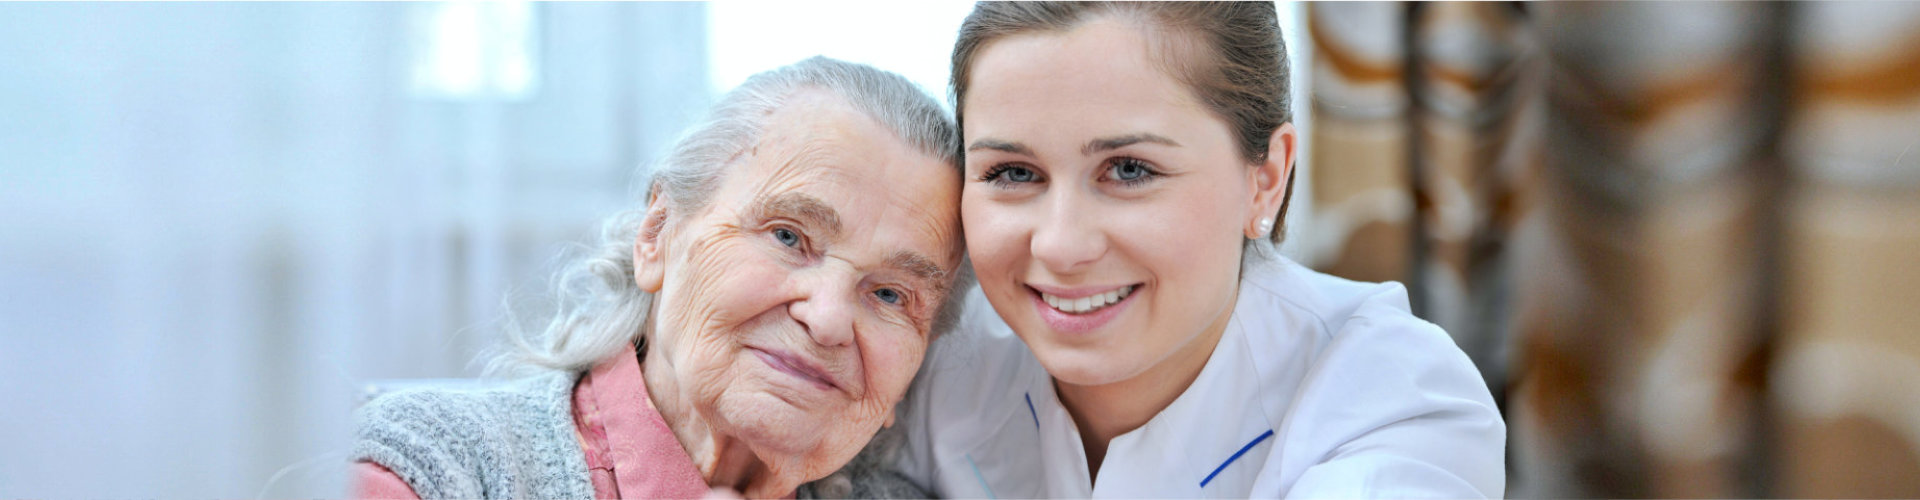 caregiver and senior woman smiling indoor